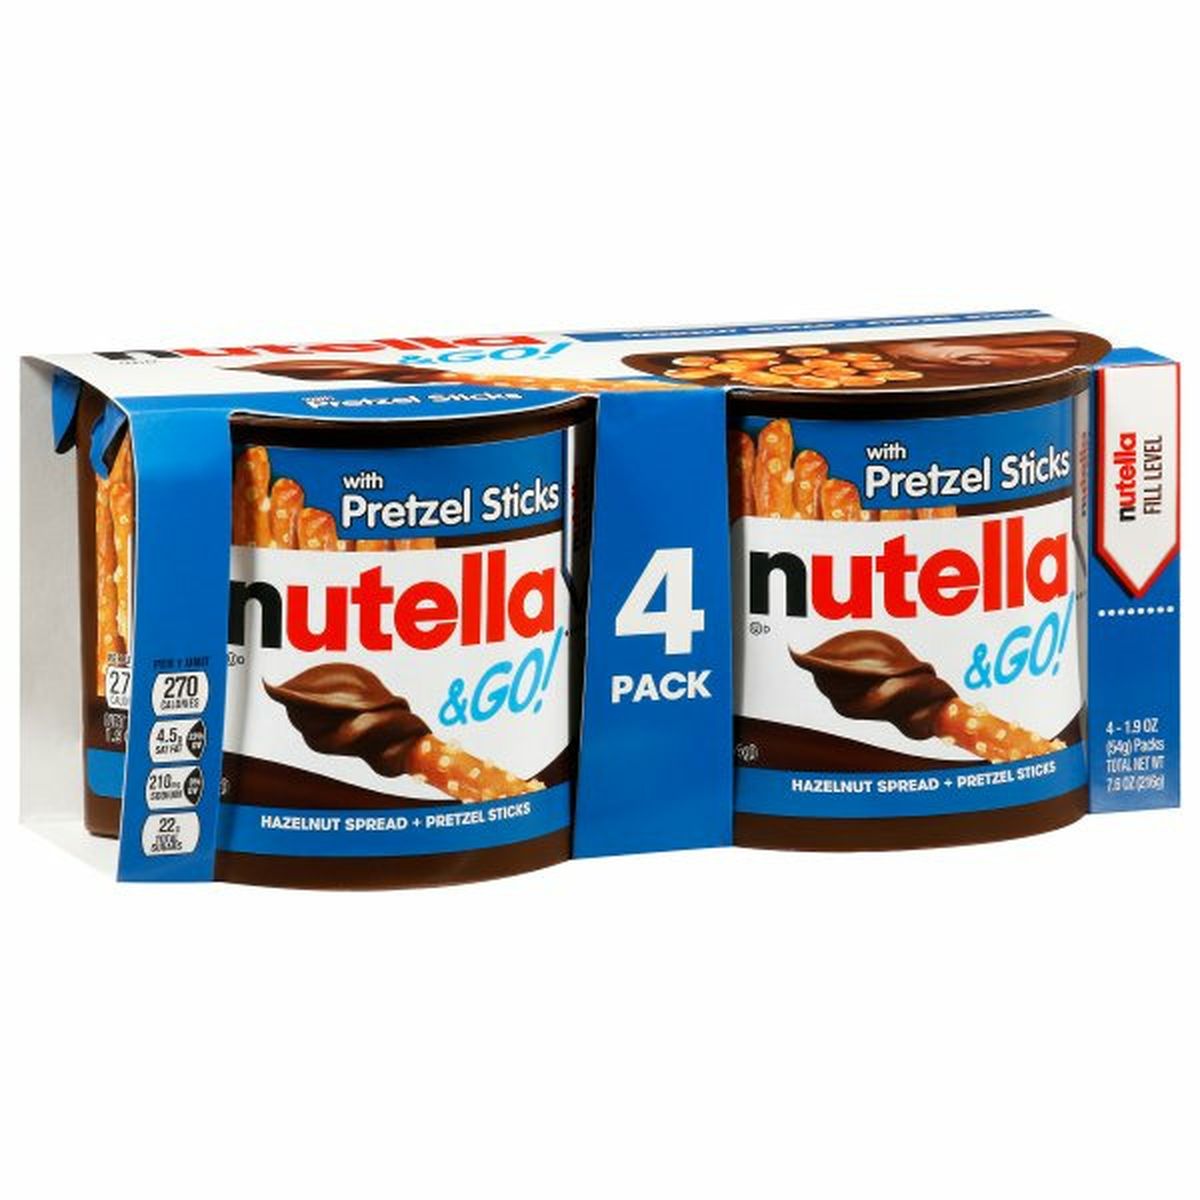 Calories in Nutella & Go Hazelnut Spread + Pretzel Sticks, 4 Pack